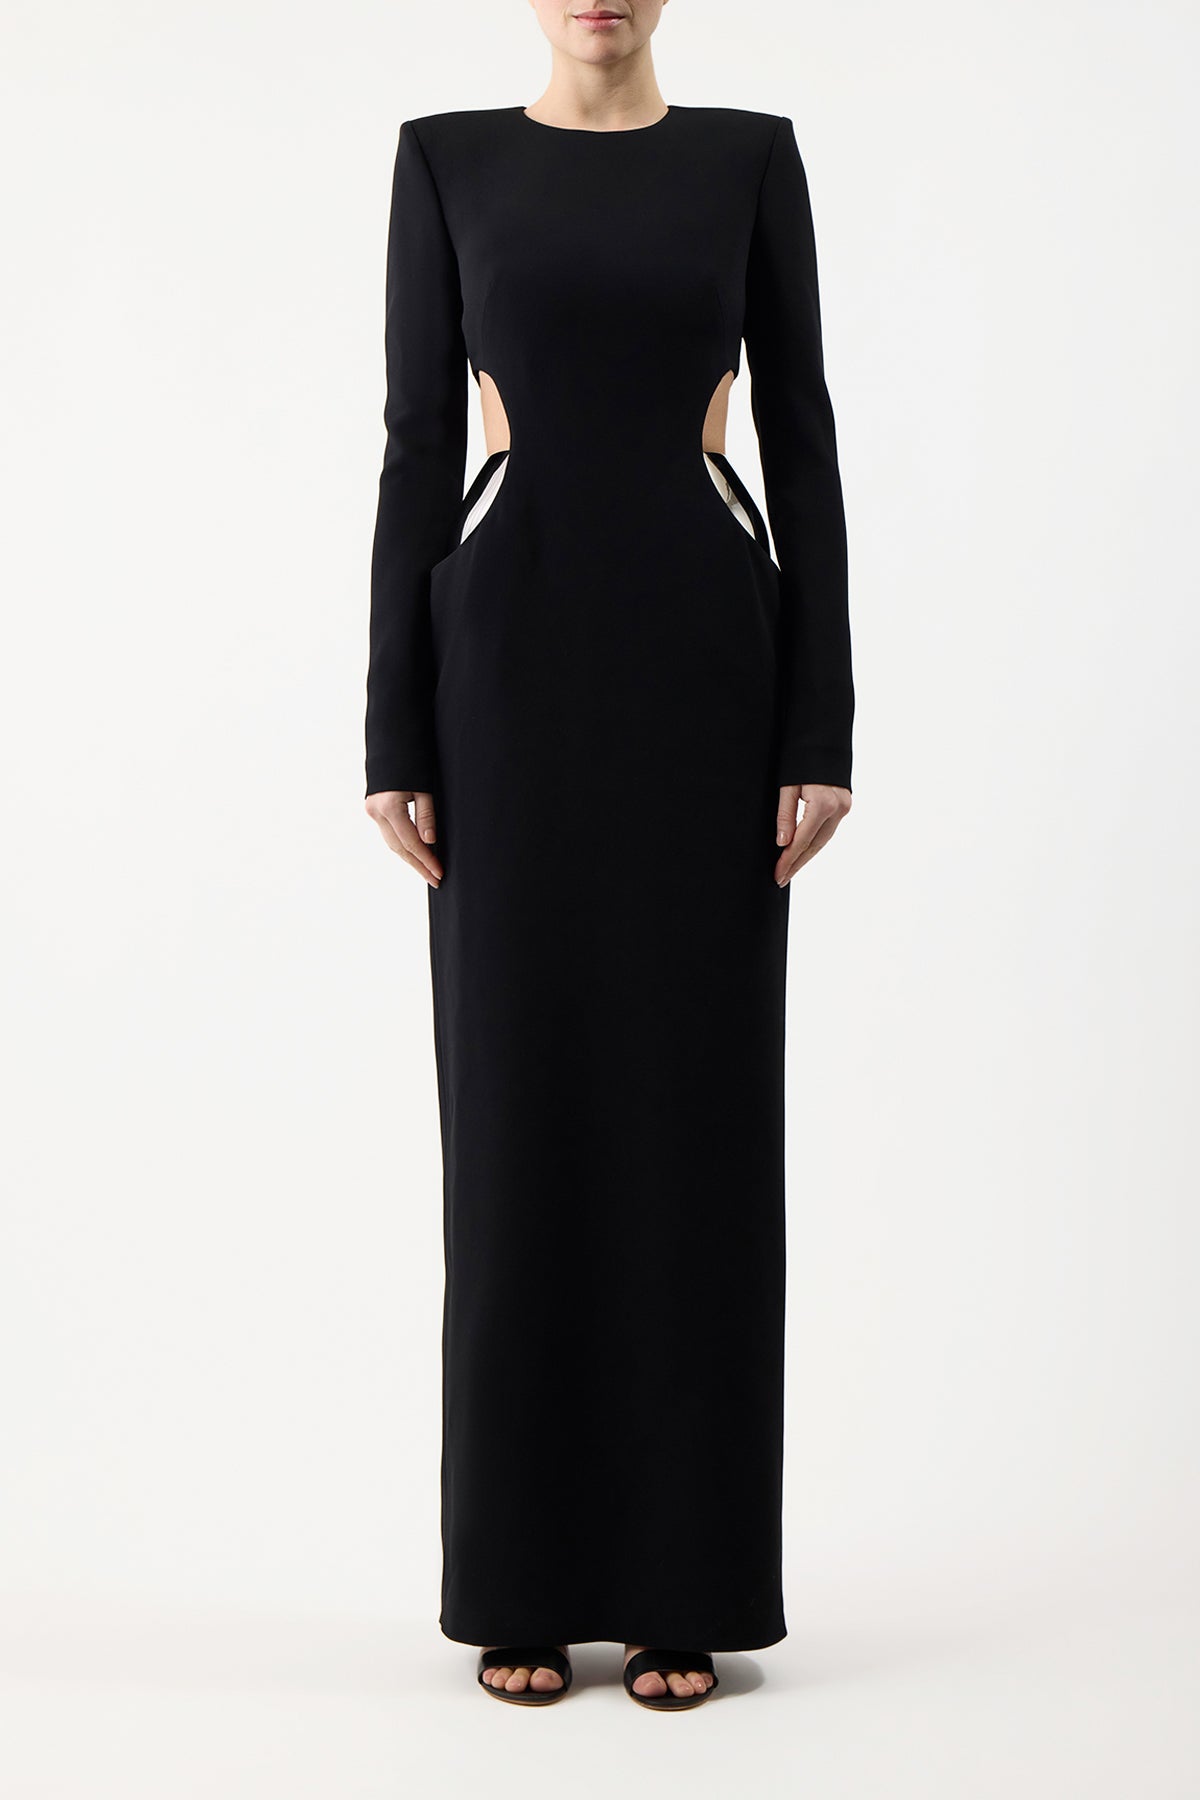 Lotta Dress in Black Silk Wool Cady – Gabriela Hearst